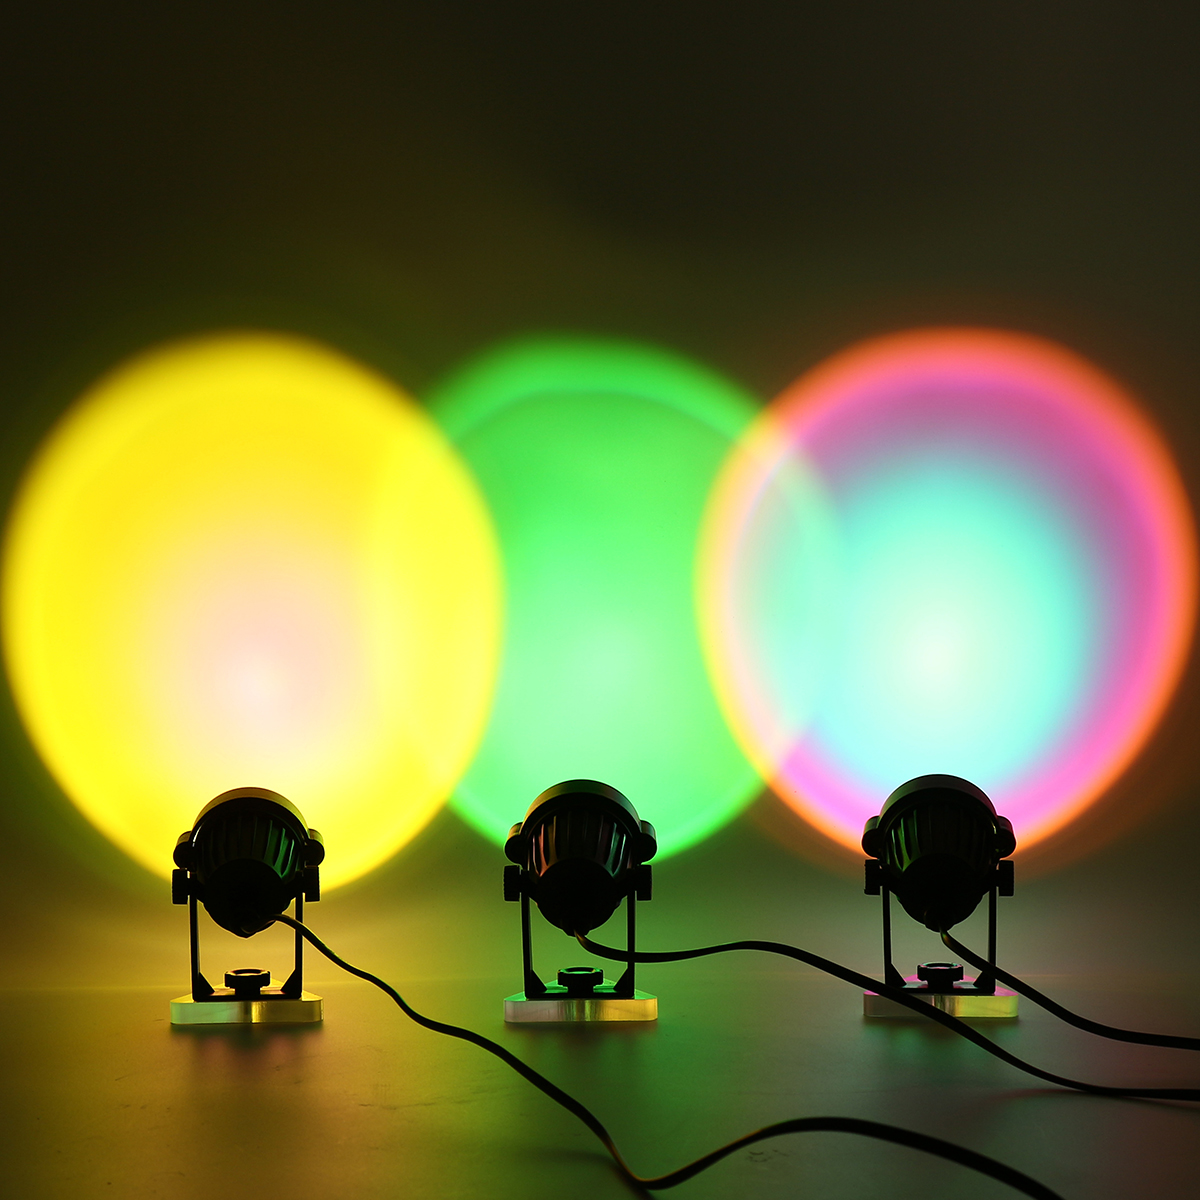 Sun-Projection-Lamp-Anti-glare-LED-Night-Light-Romantic-Visual-Experience-Rainbow-Projector-Modern-A-1851221-11